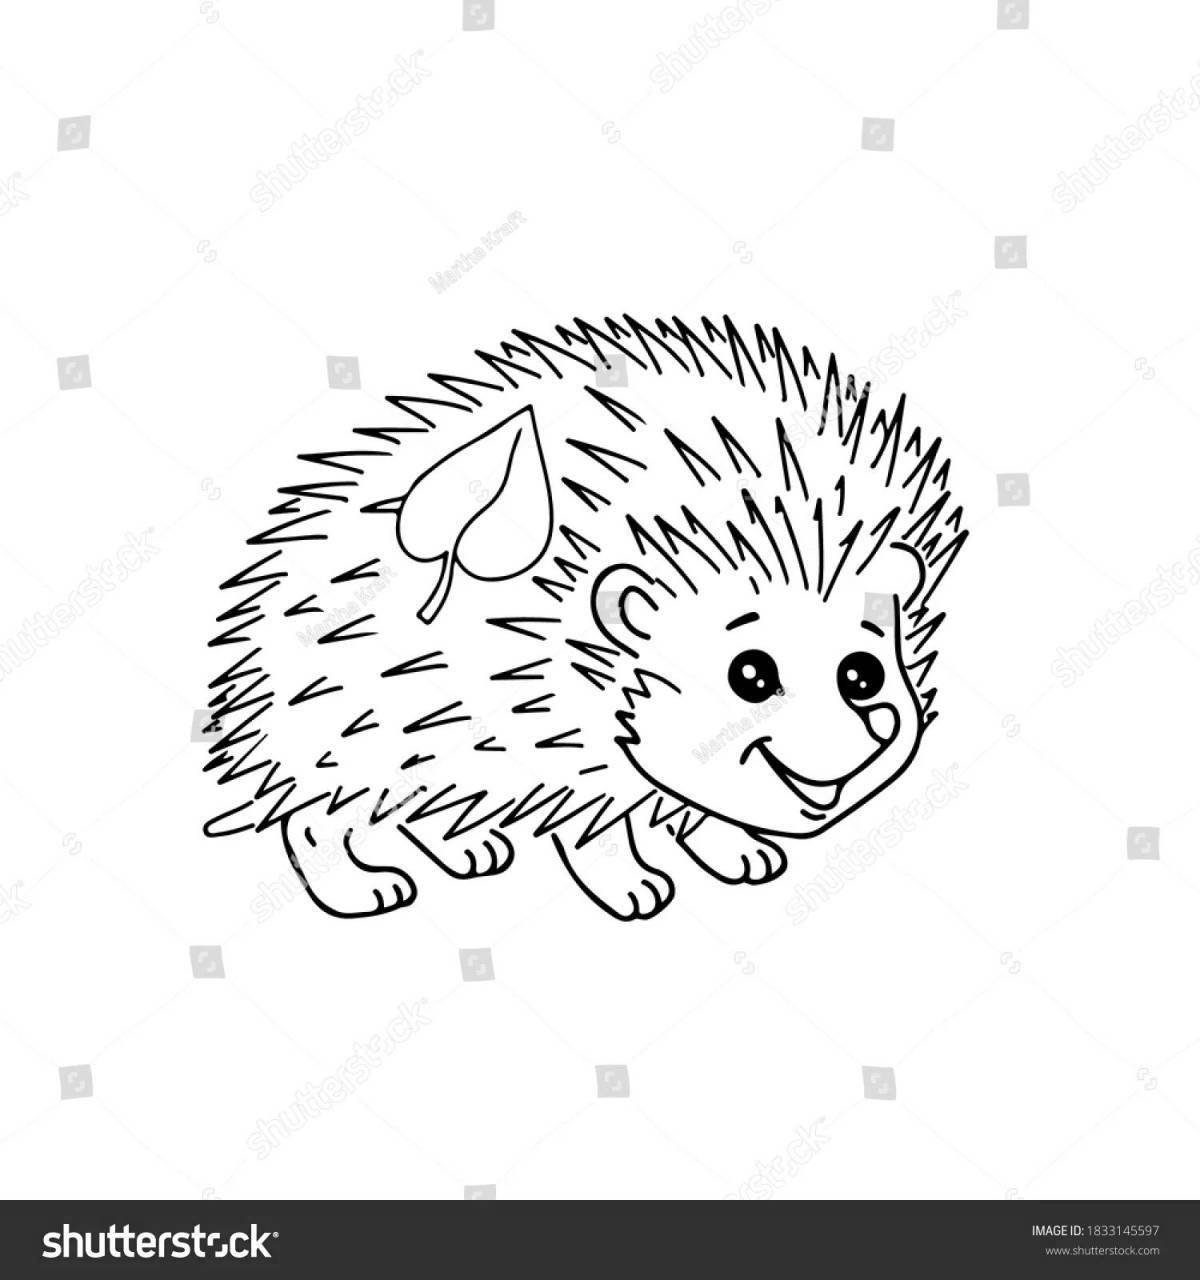 Luminous hedgehog coloring page